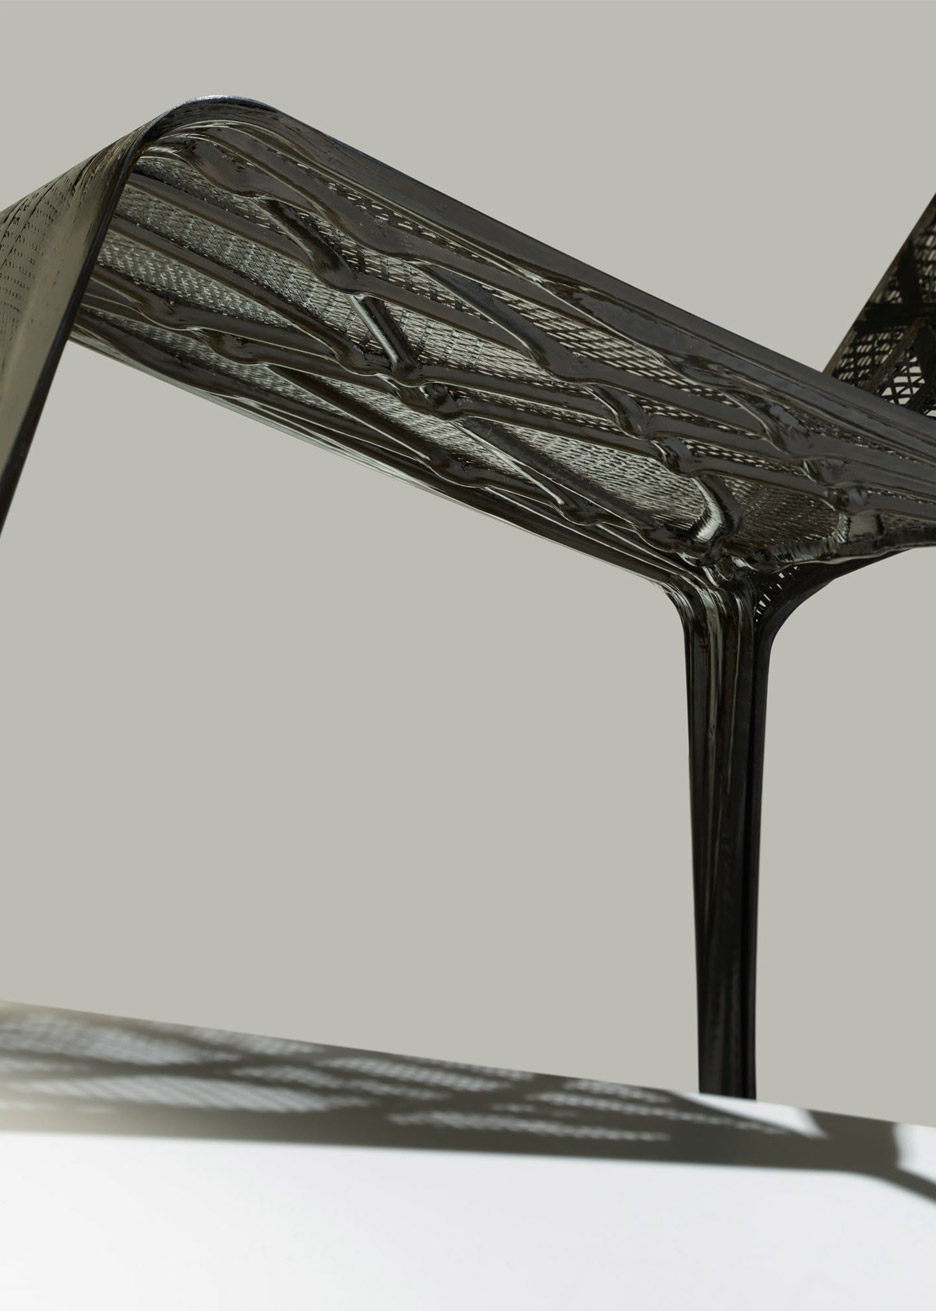 technocast-marleen-kaptein-nlr-carbon-fibre-chair-furniture-design-label-breed_rushi_1568_1.jpg